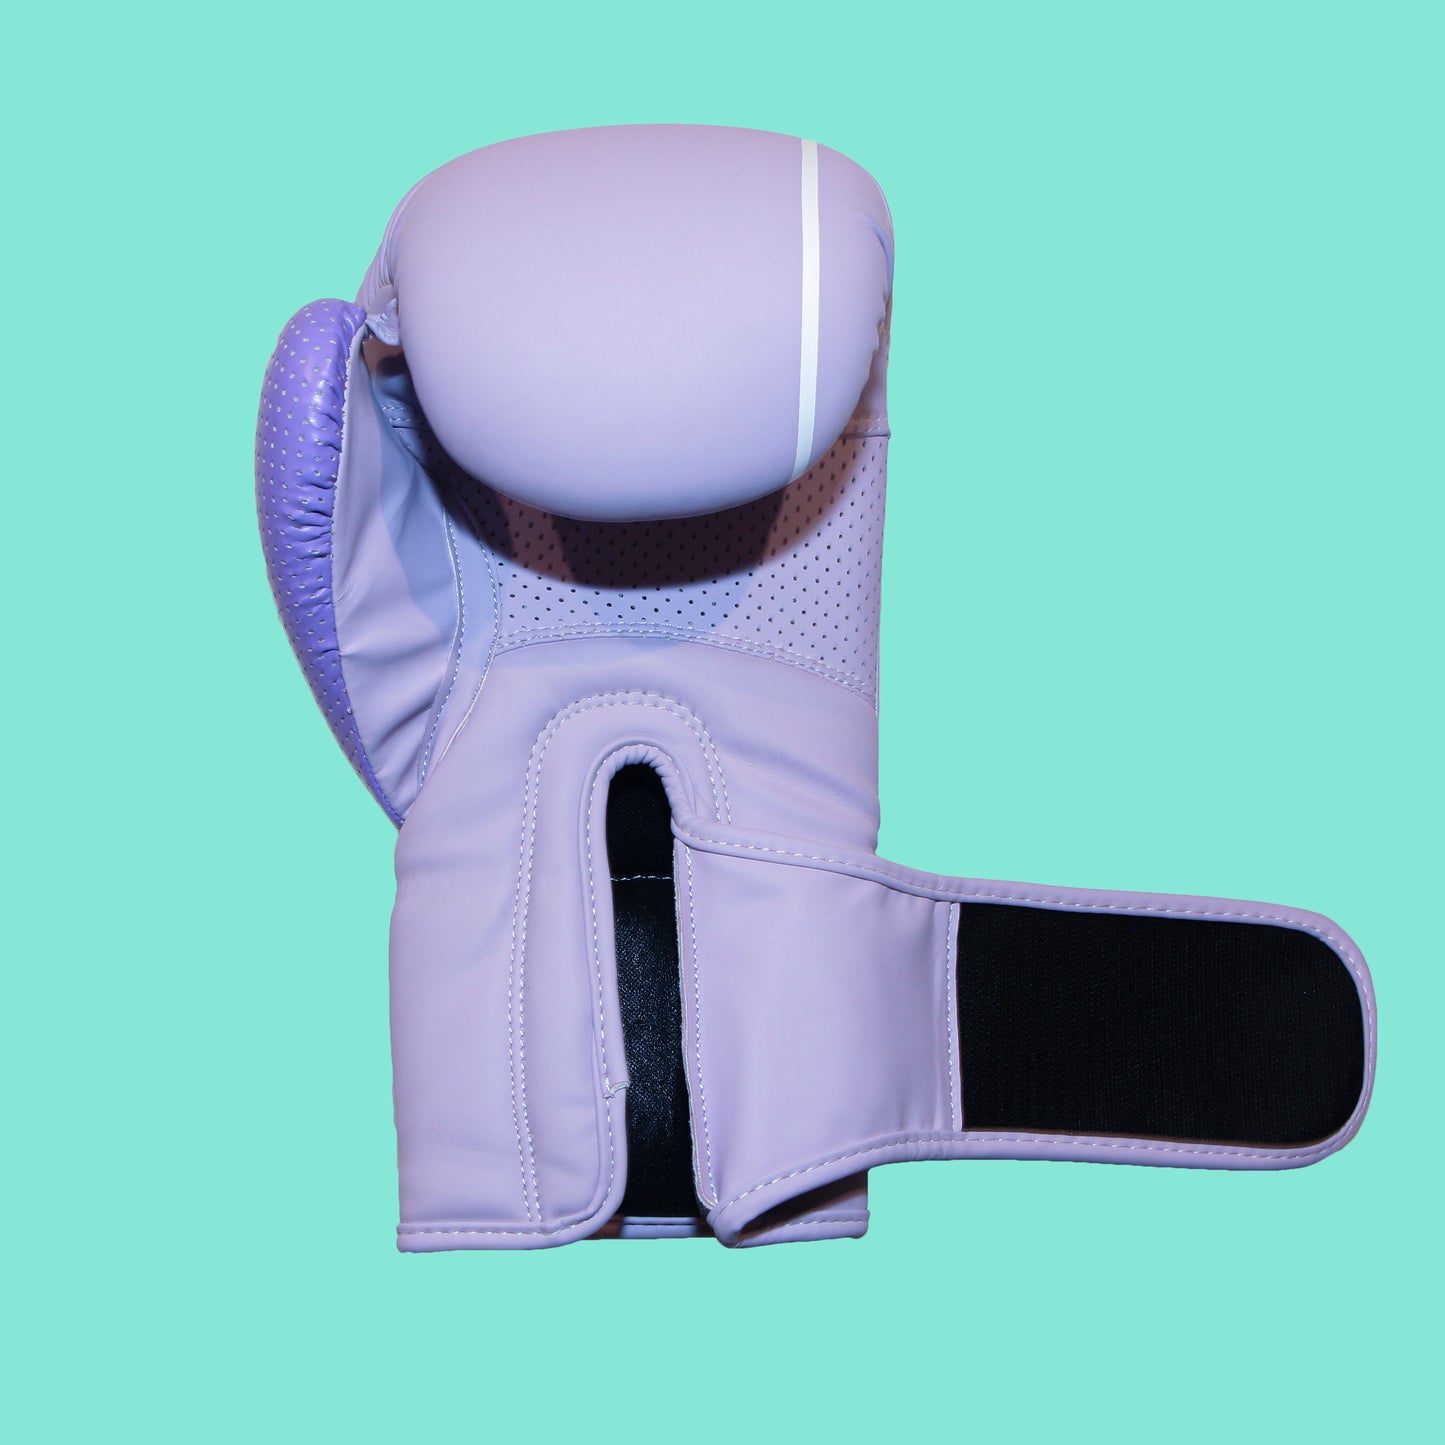 J1 Womens Boxing Gloves - Lavender